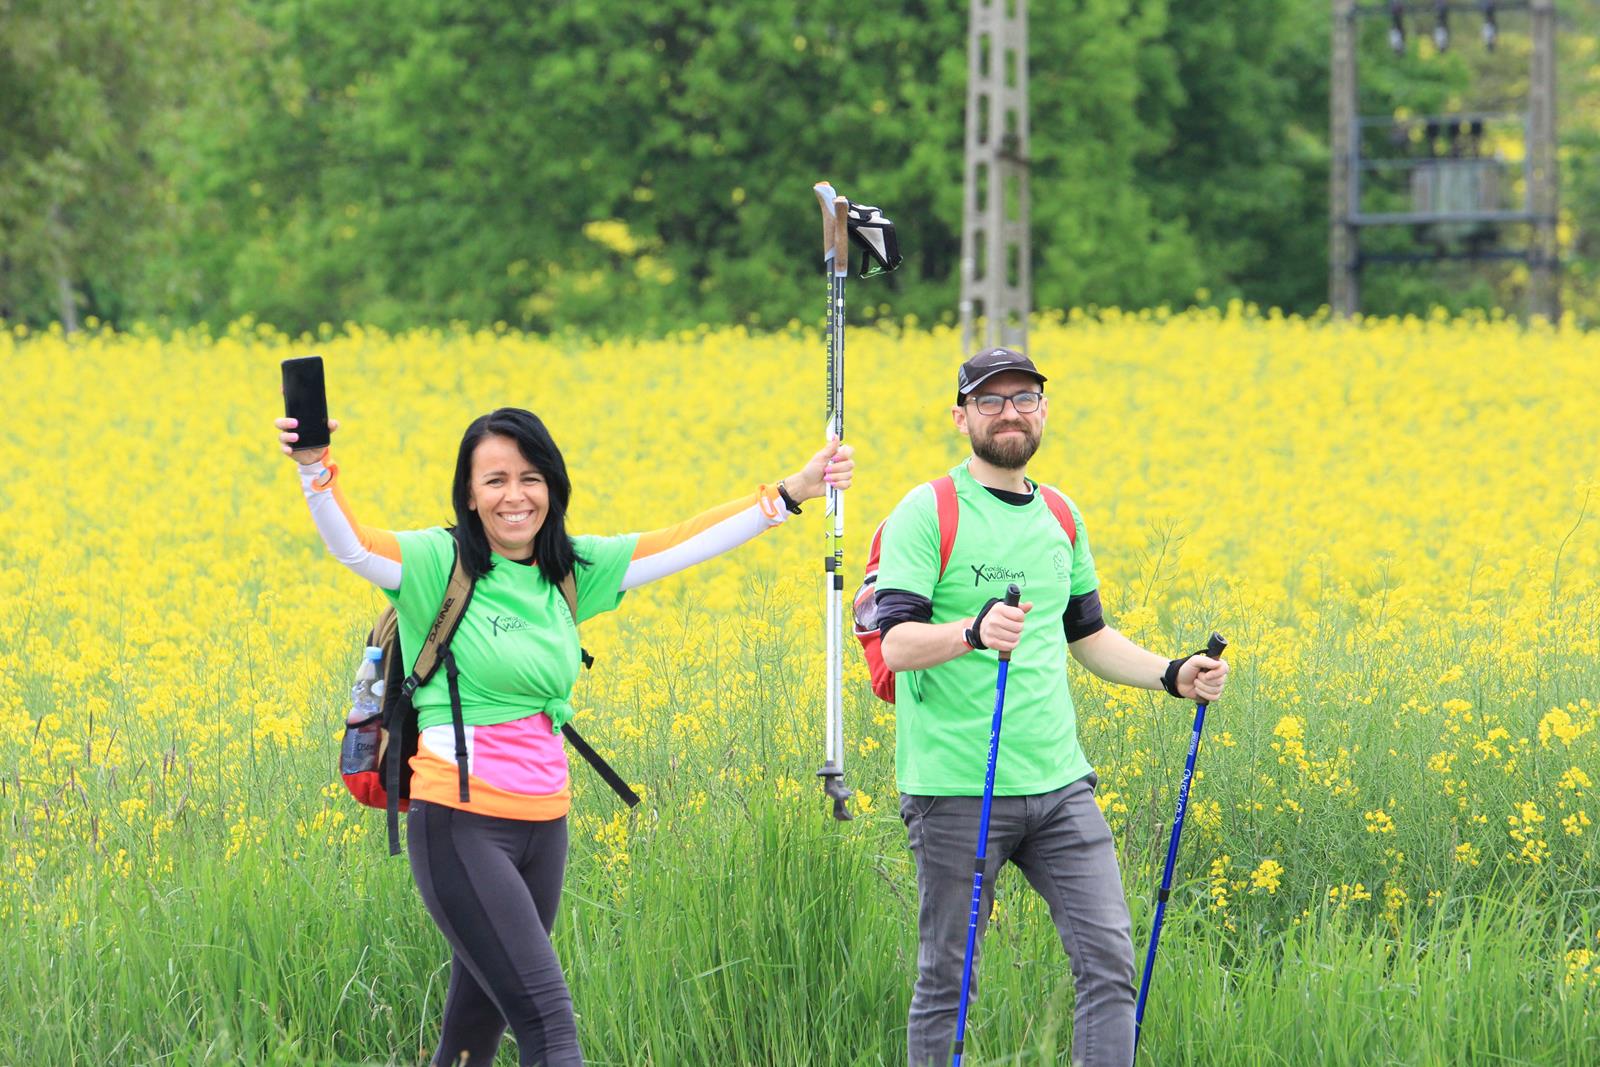 Maraton Nordic Walking 2 osoby na tle kwitnącego żółtego rzepaku